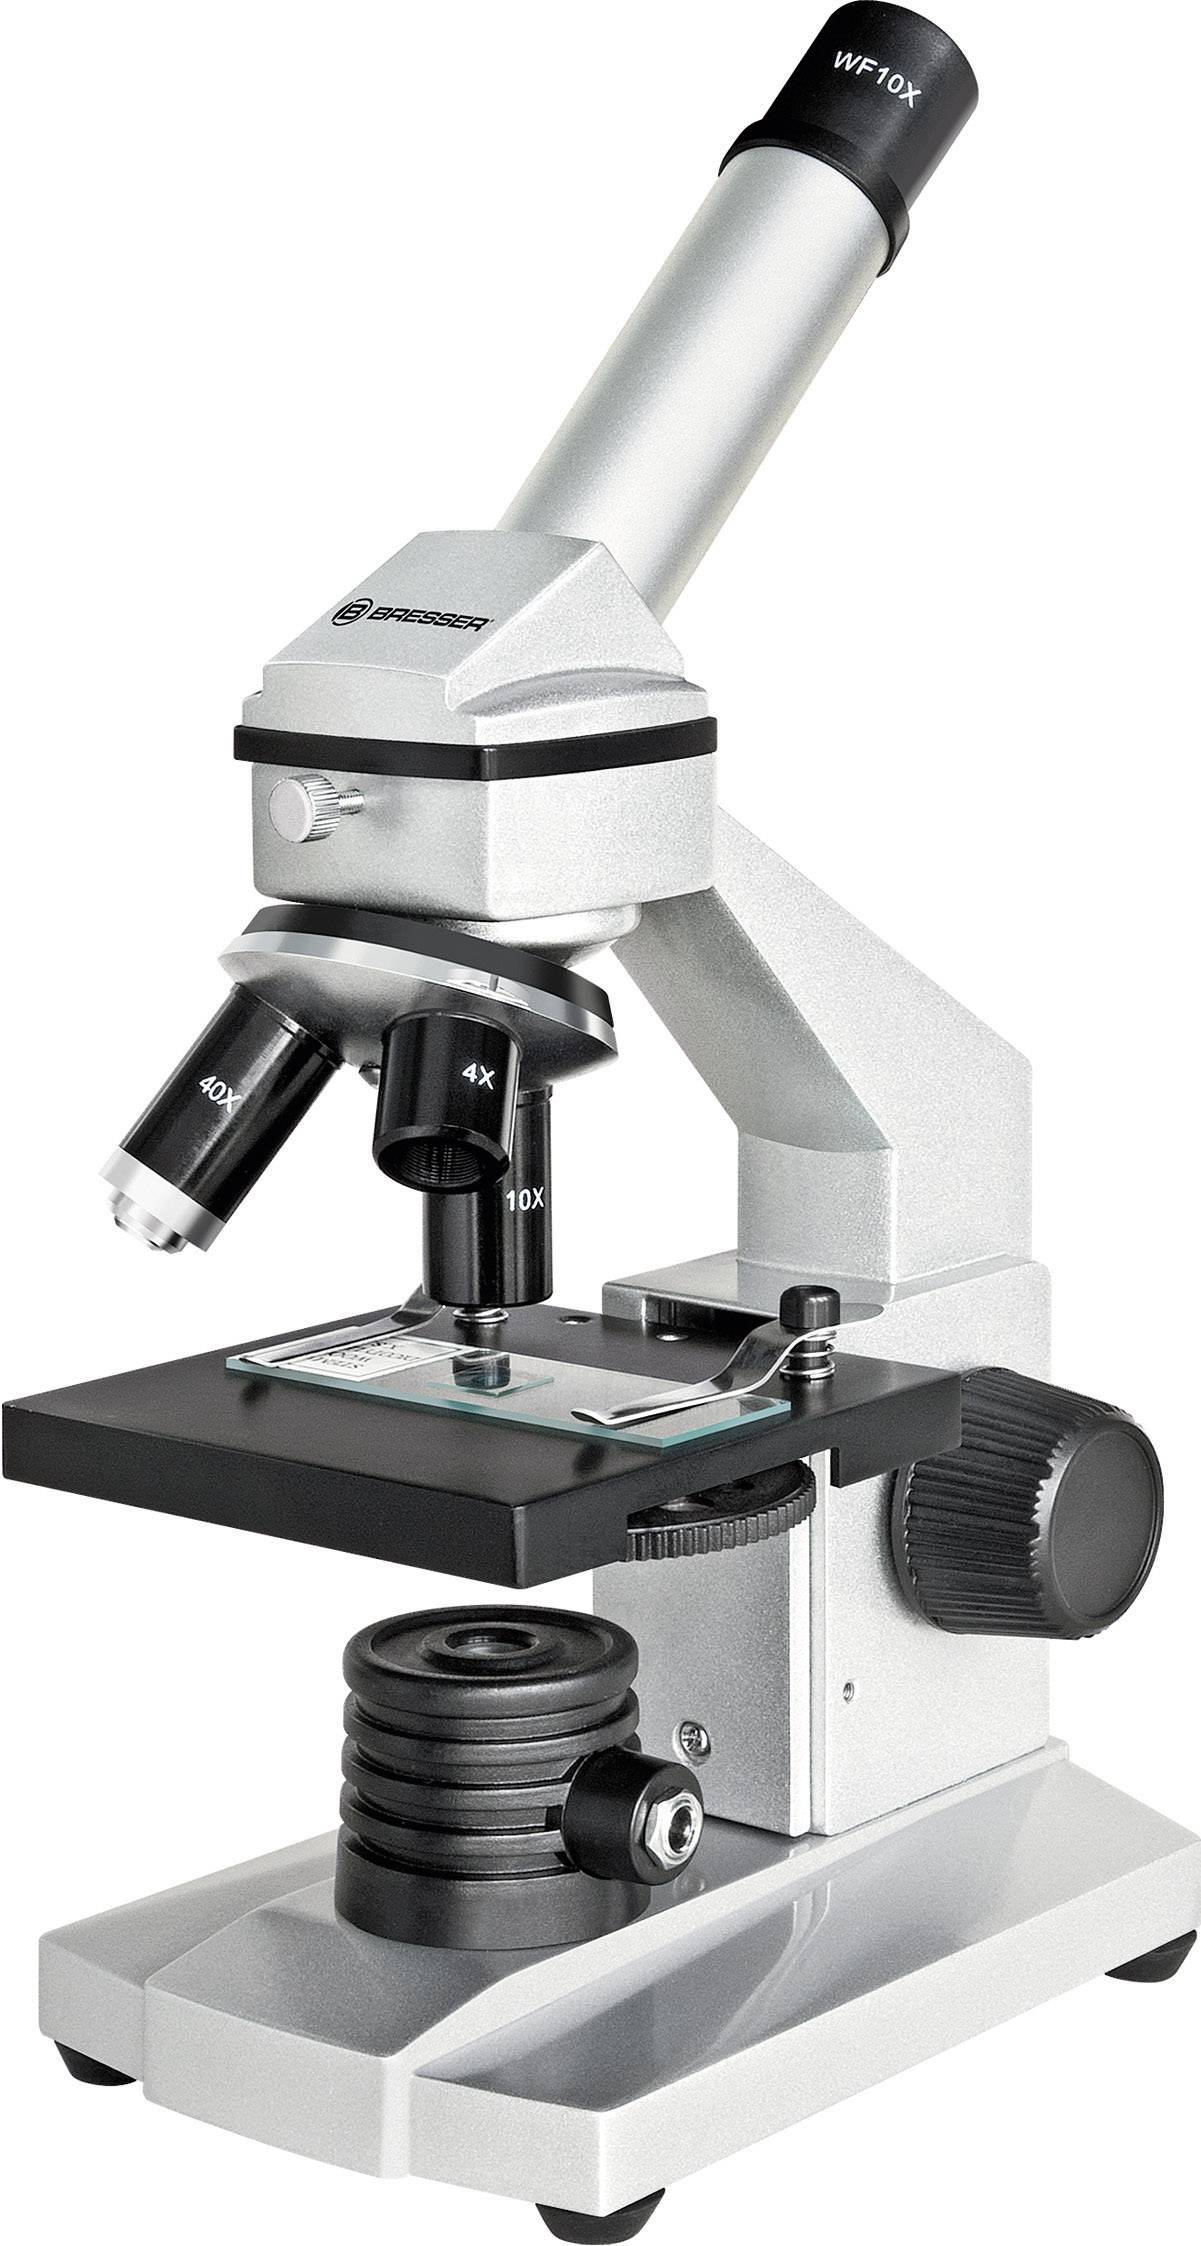 bresser biolux ng microscope